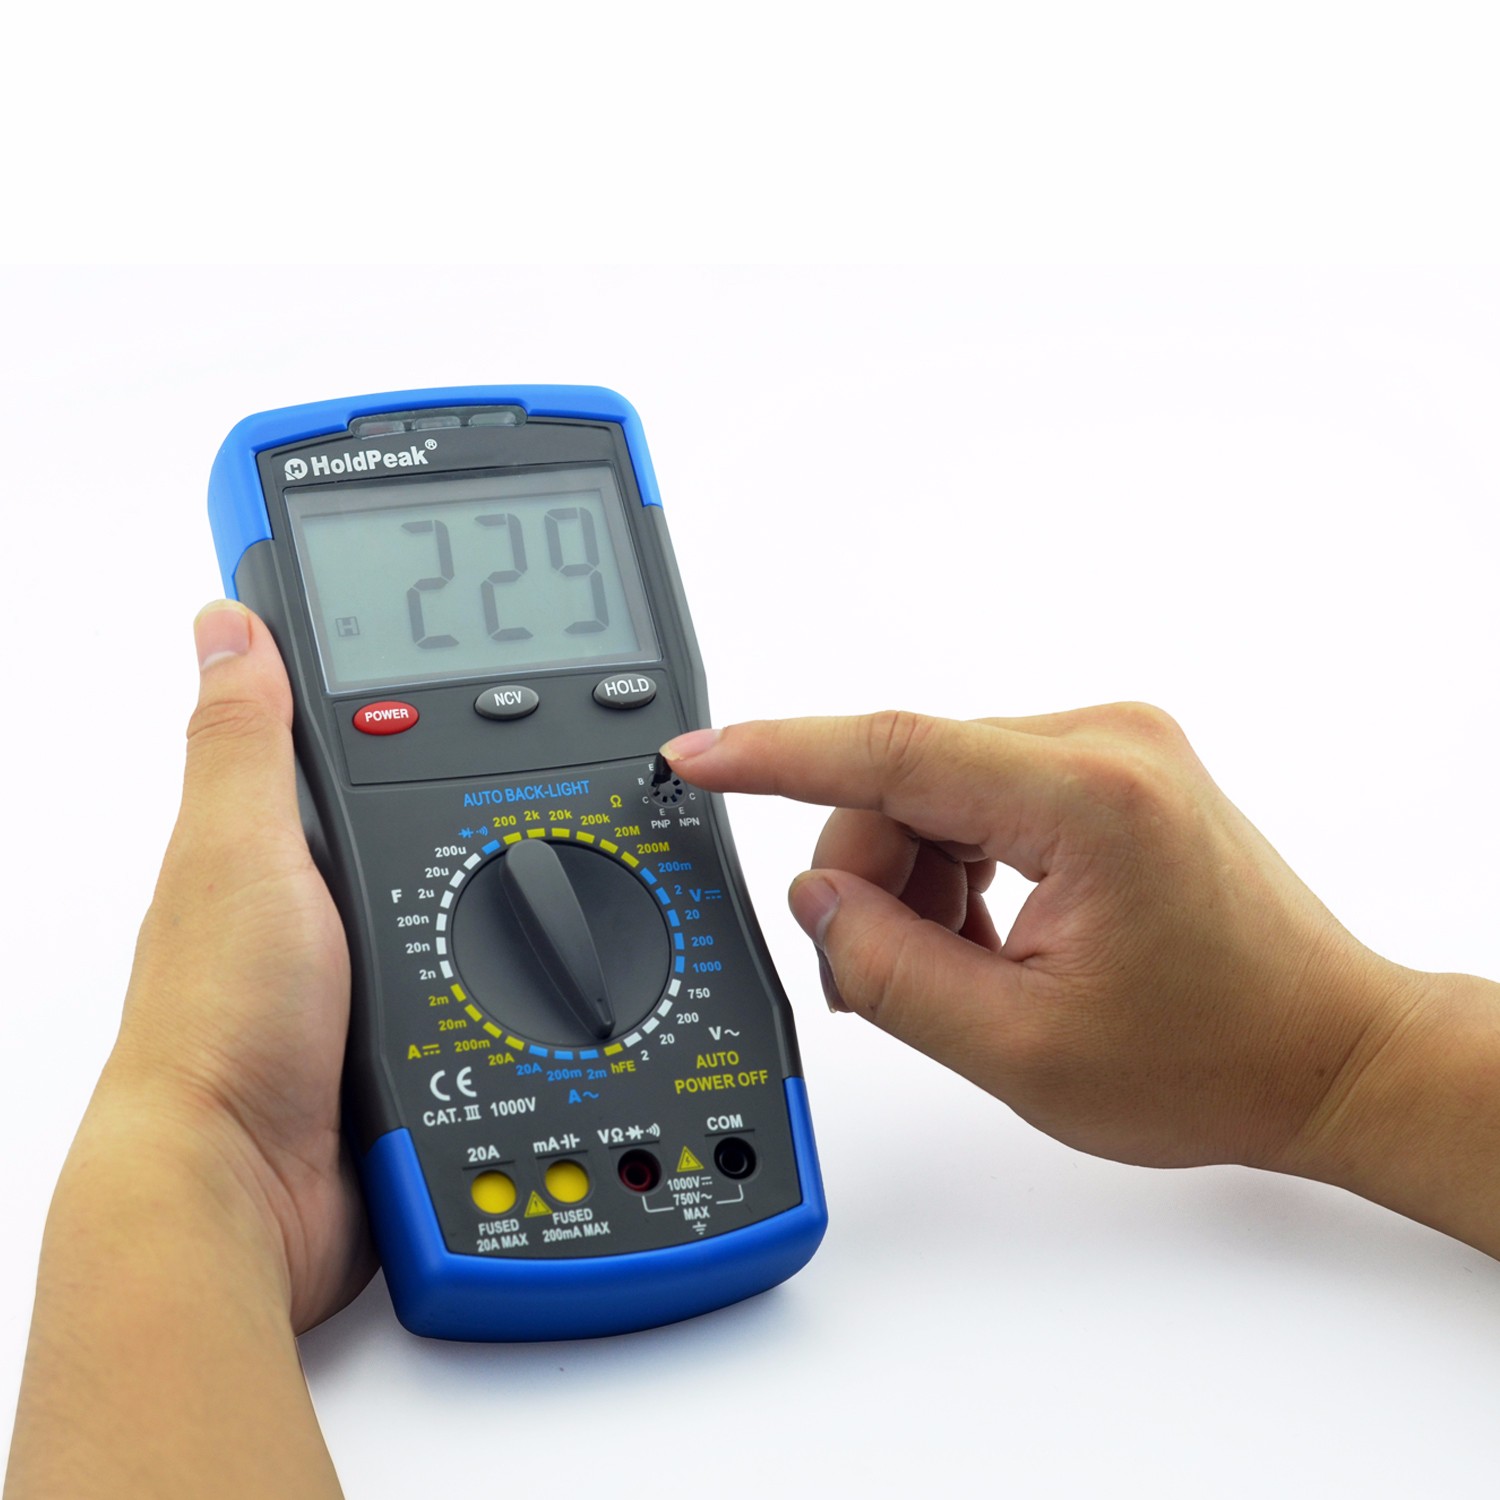 temperature pen type multimeter supplier for measurements HoldPeak